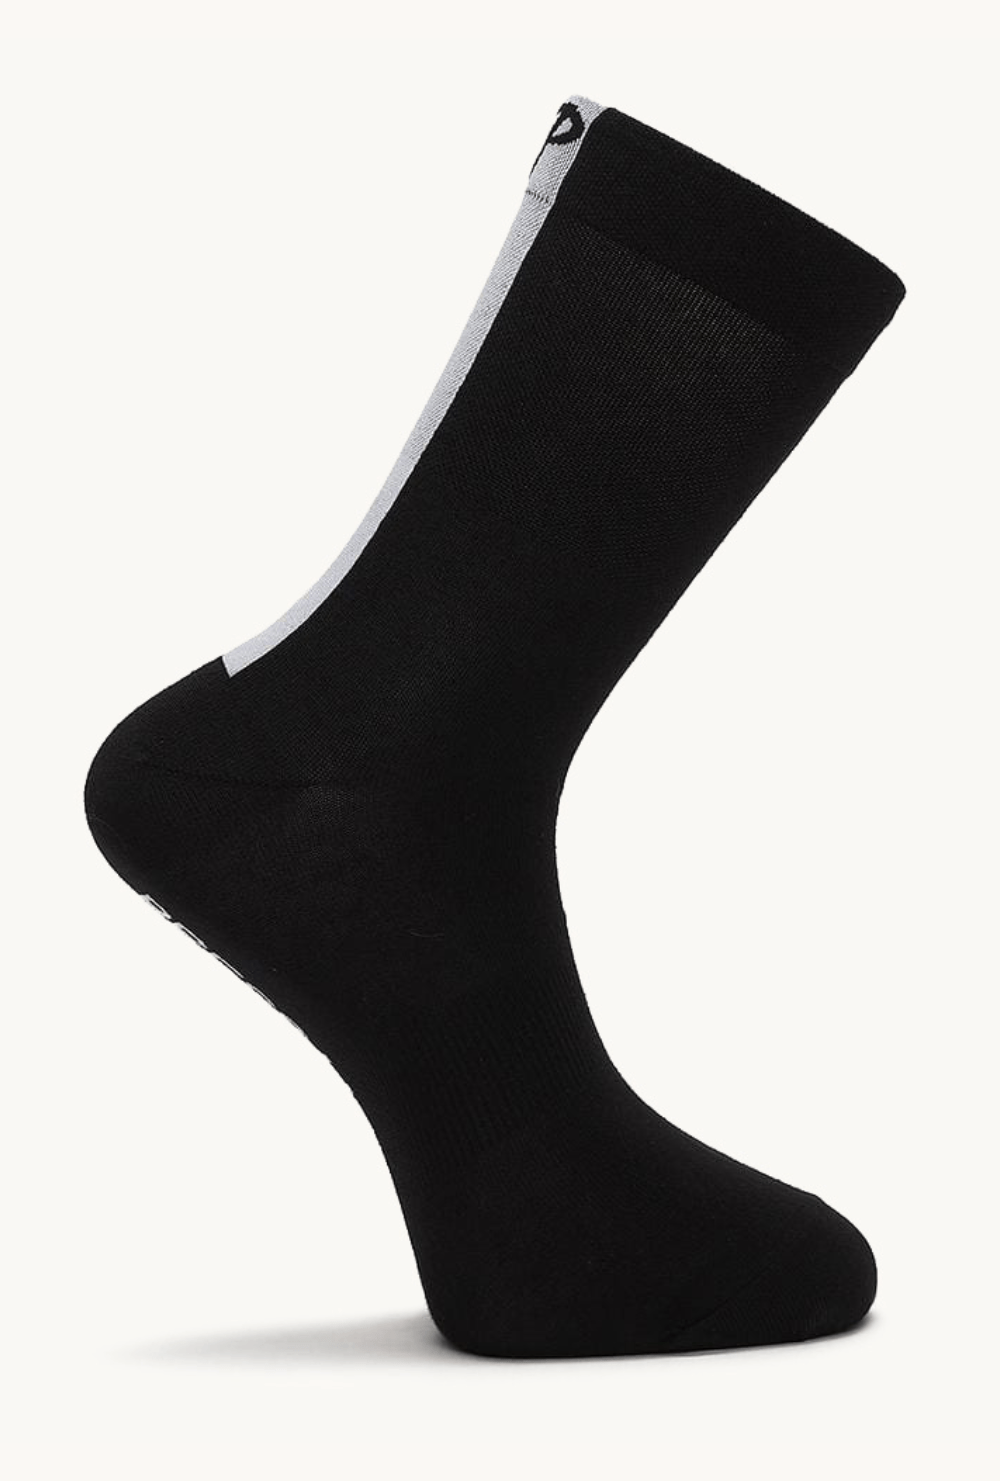 Pcs  Press Hard Here - Socks Black  Small / Medium / Black